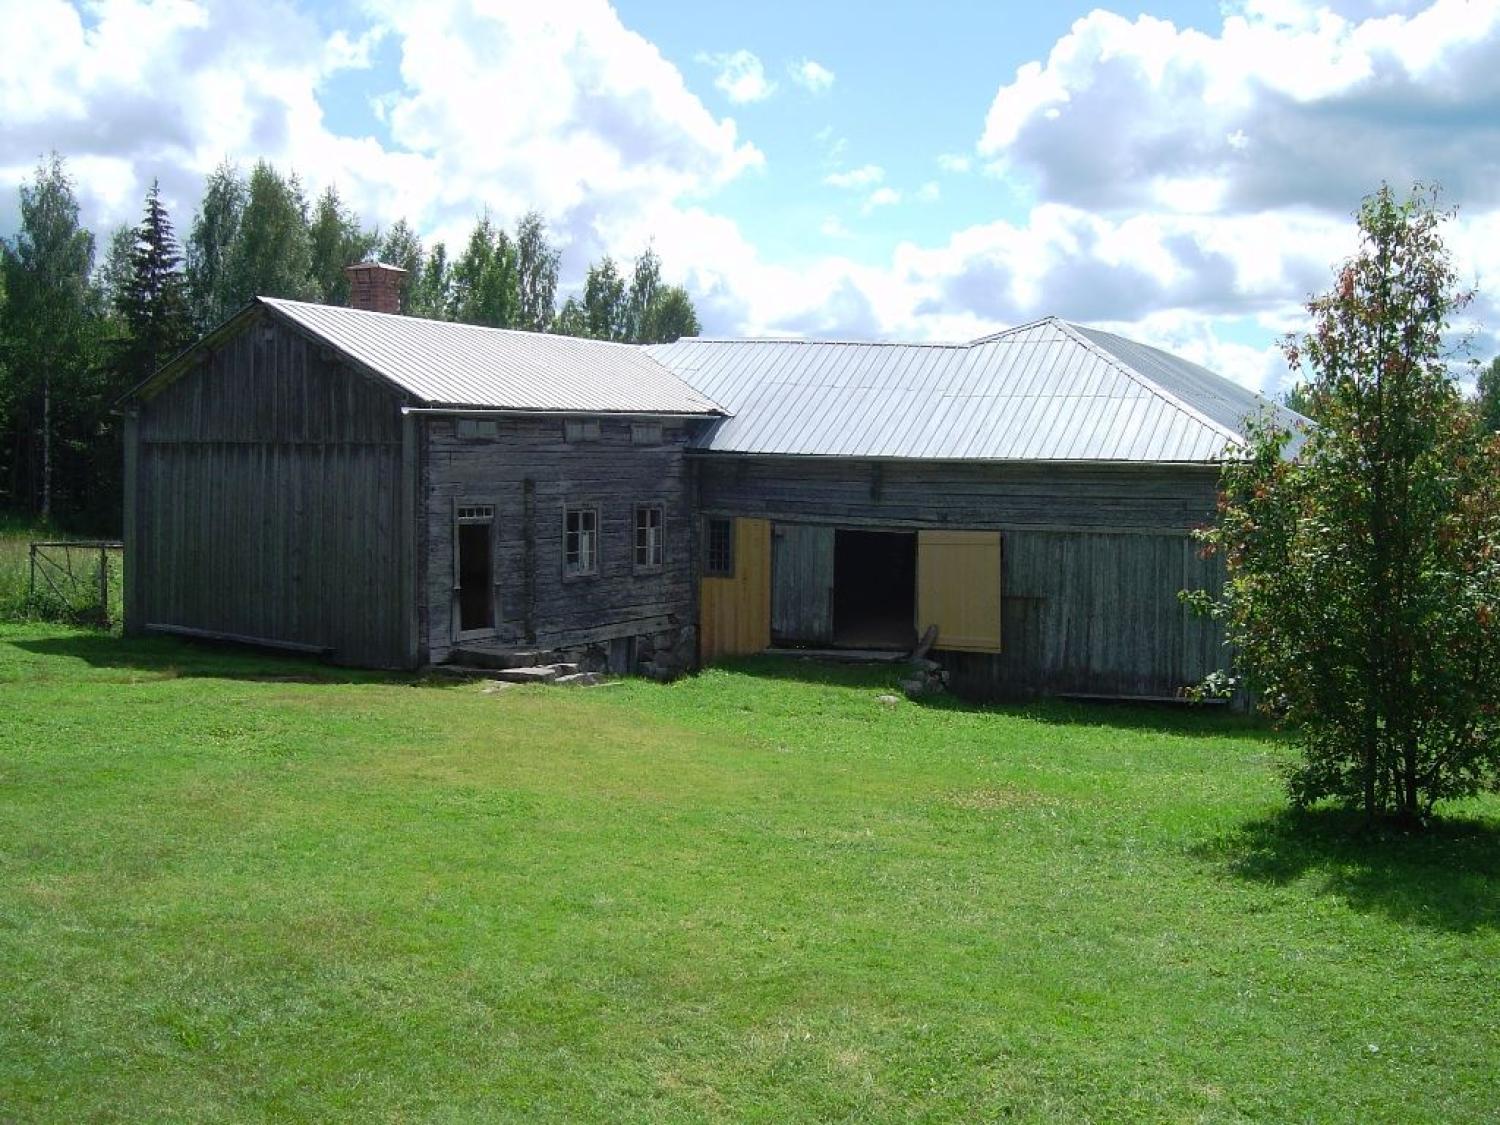 The Hälsingland Farm Ersk-Mats